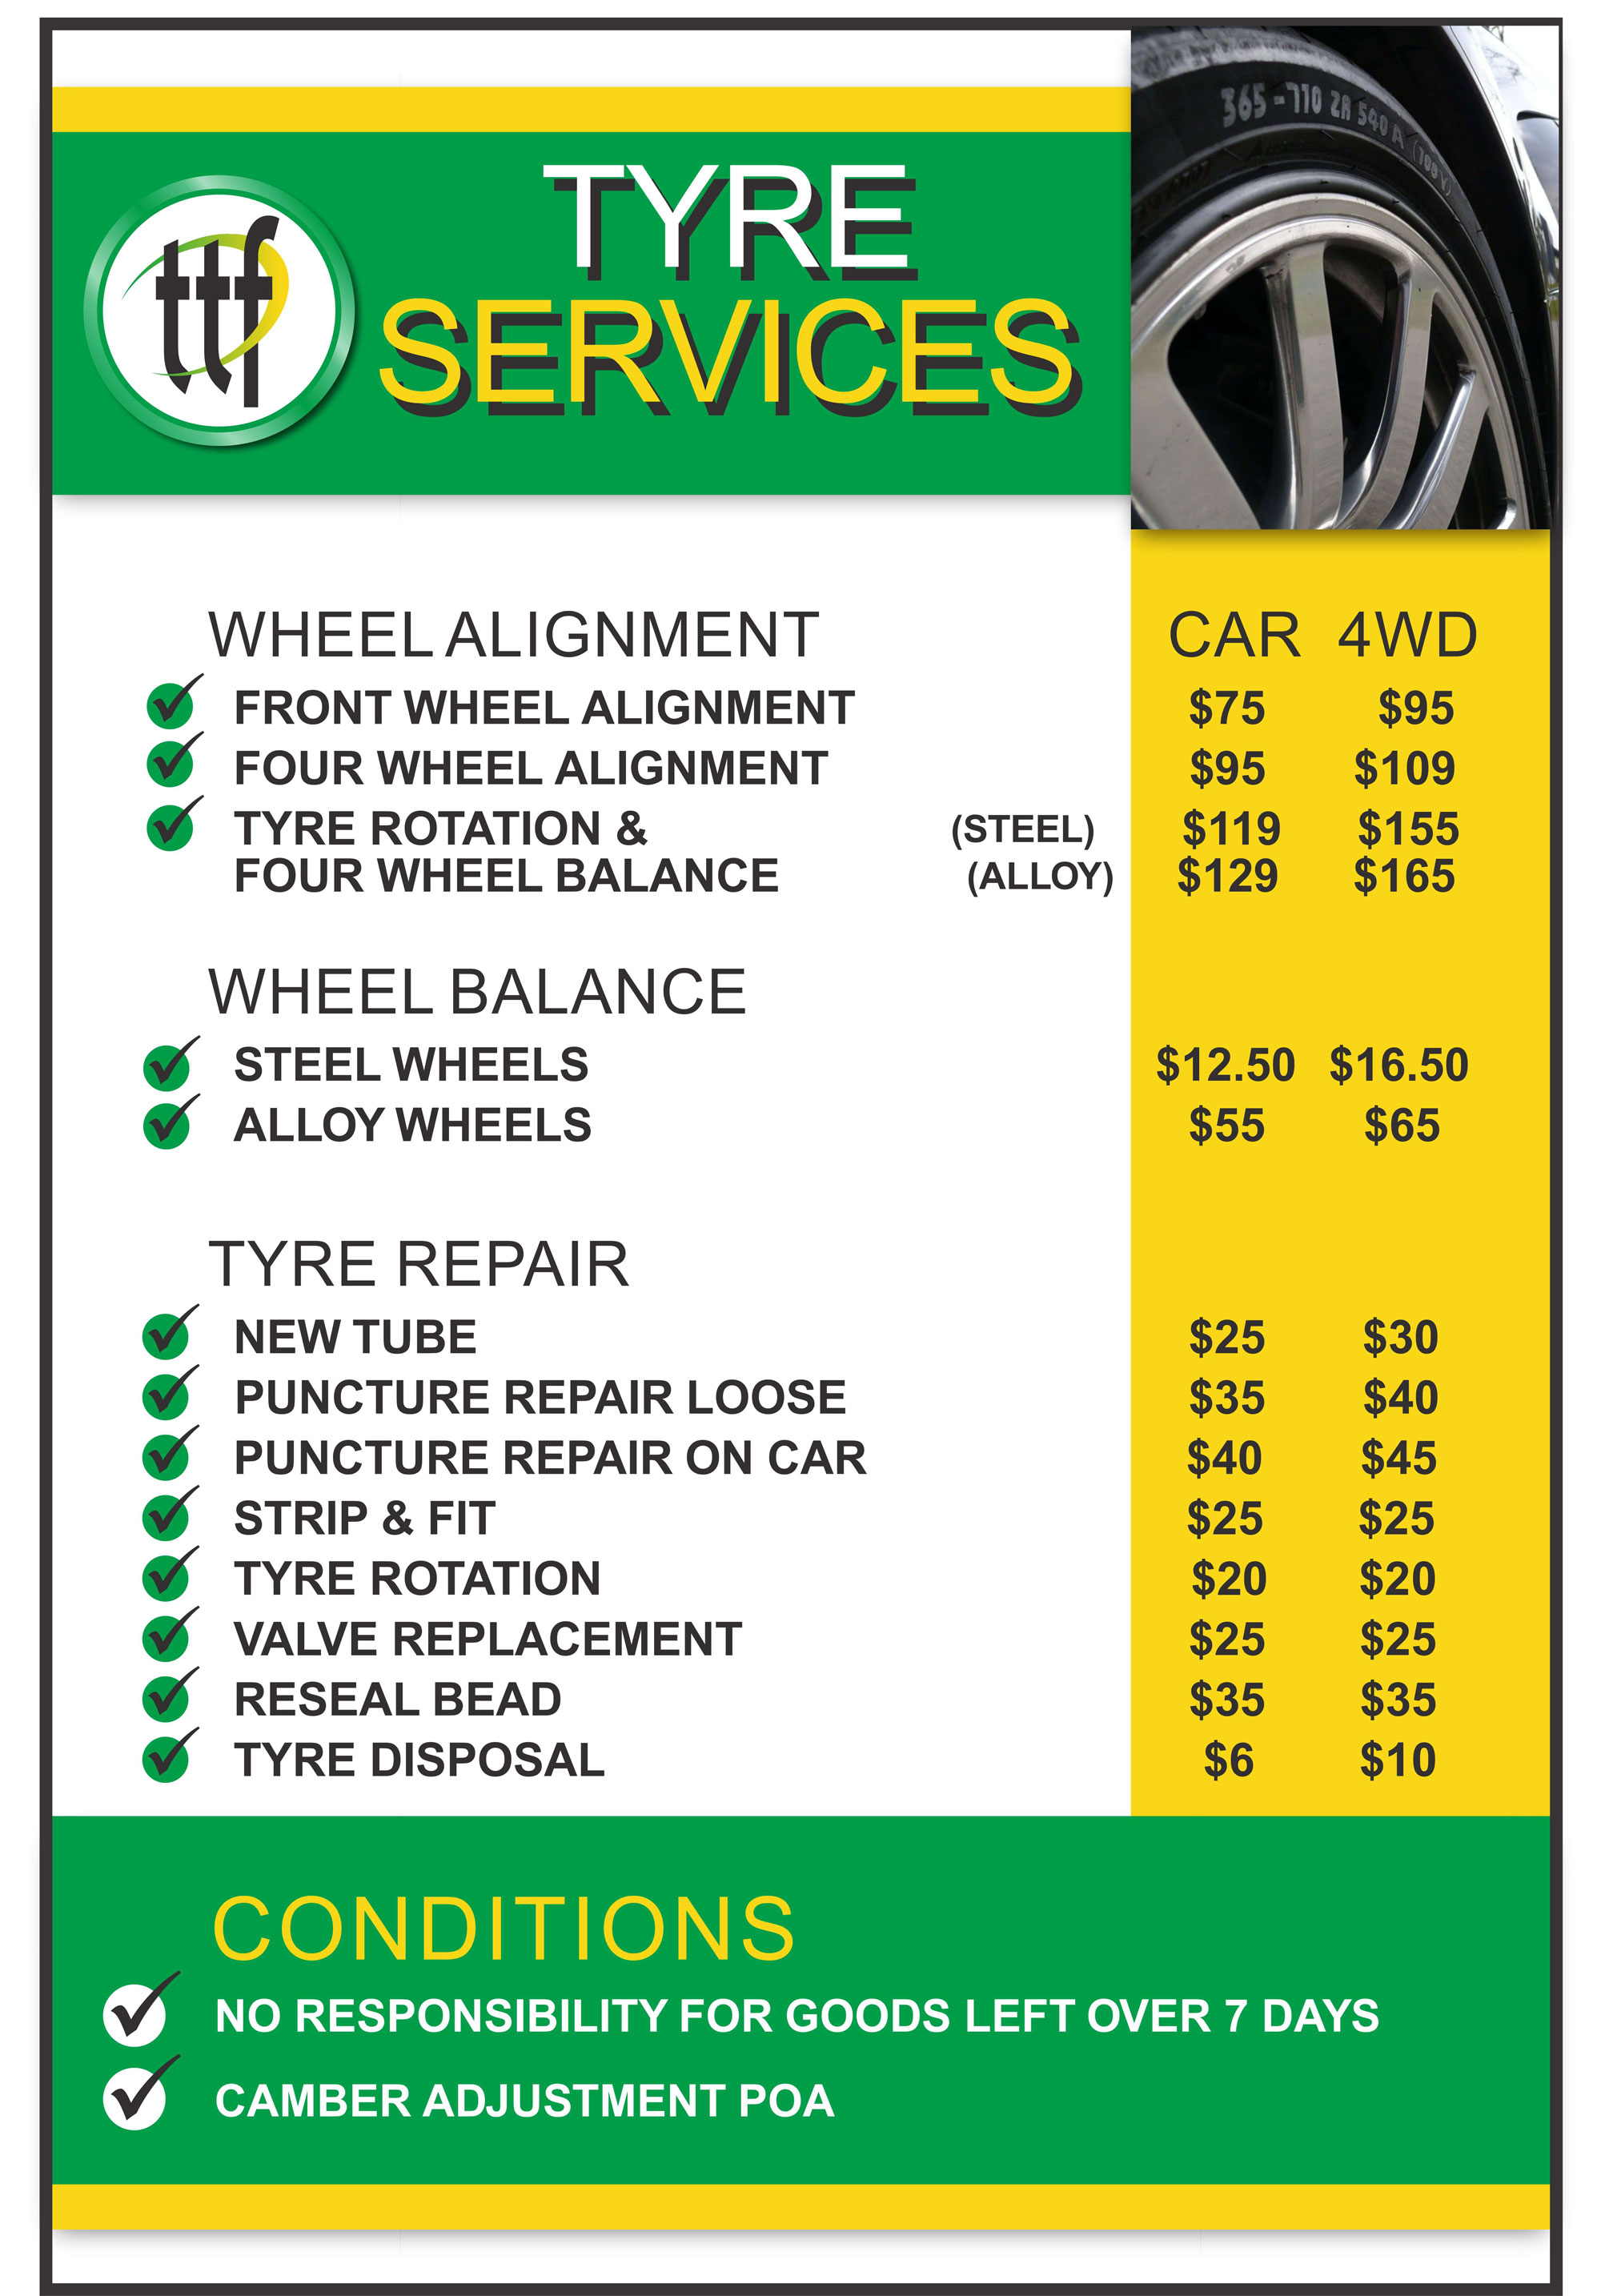 TTF Tyre Service